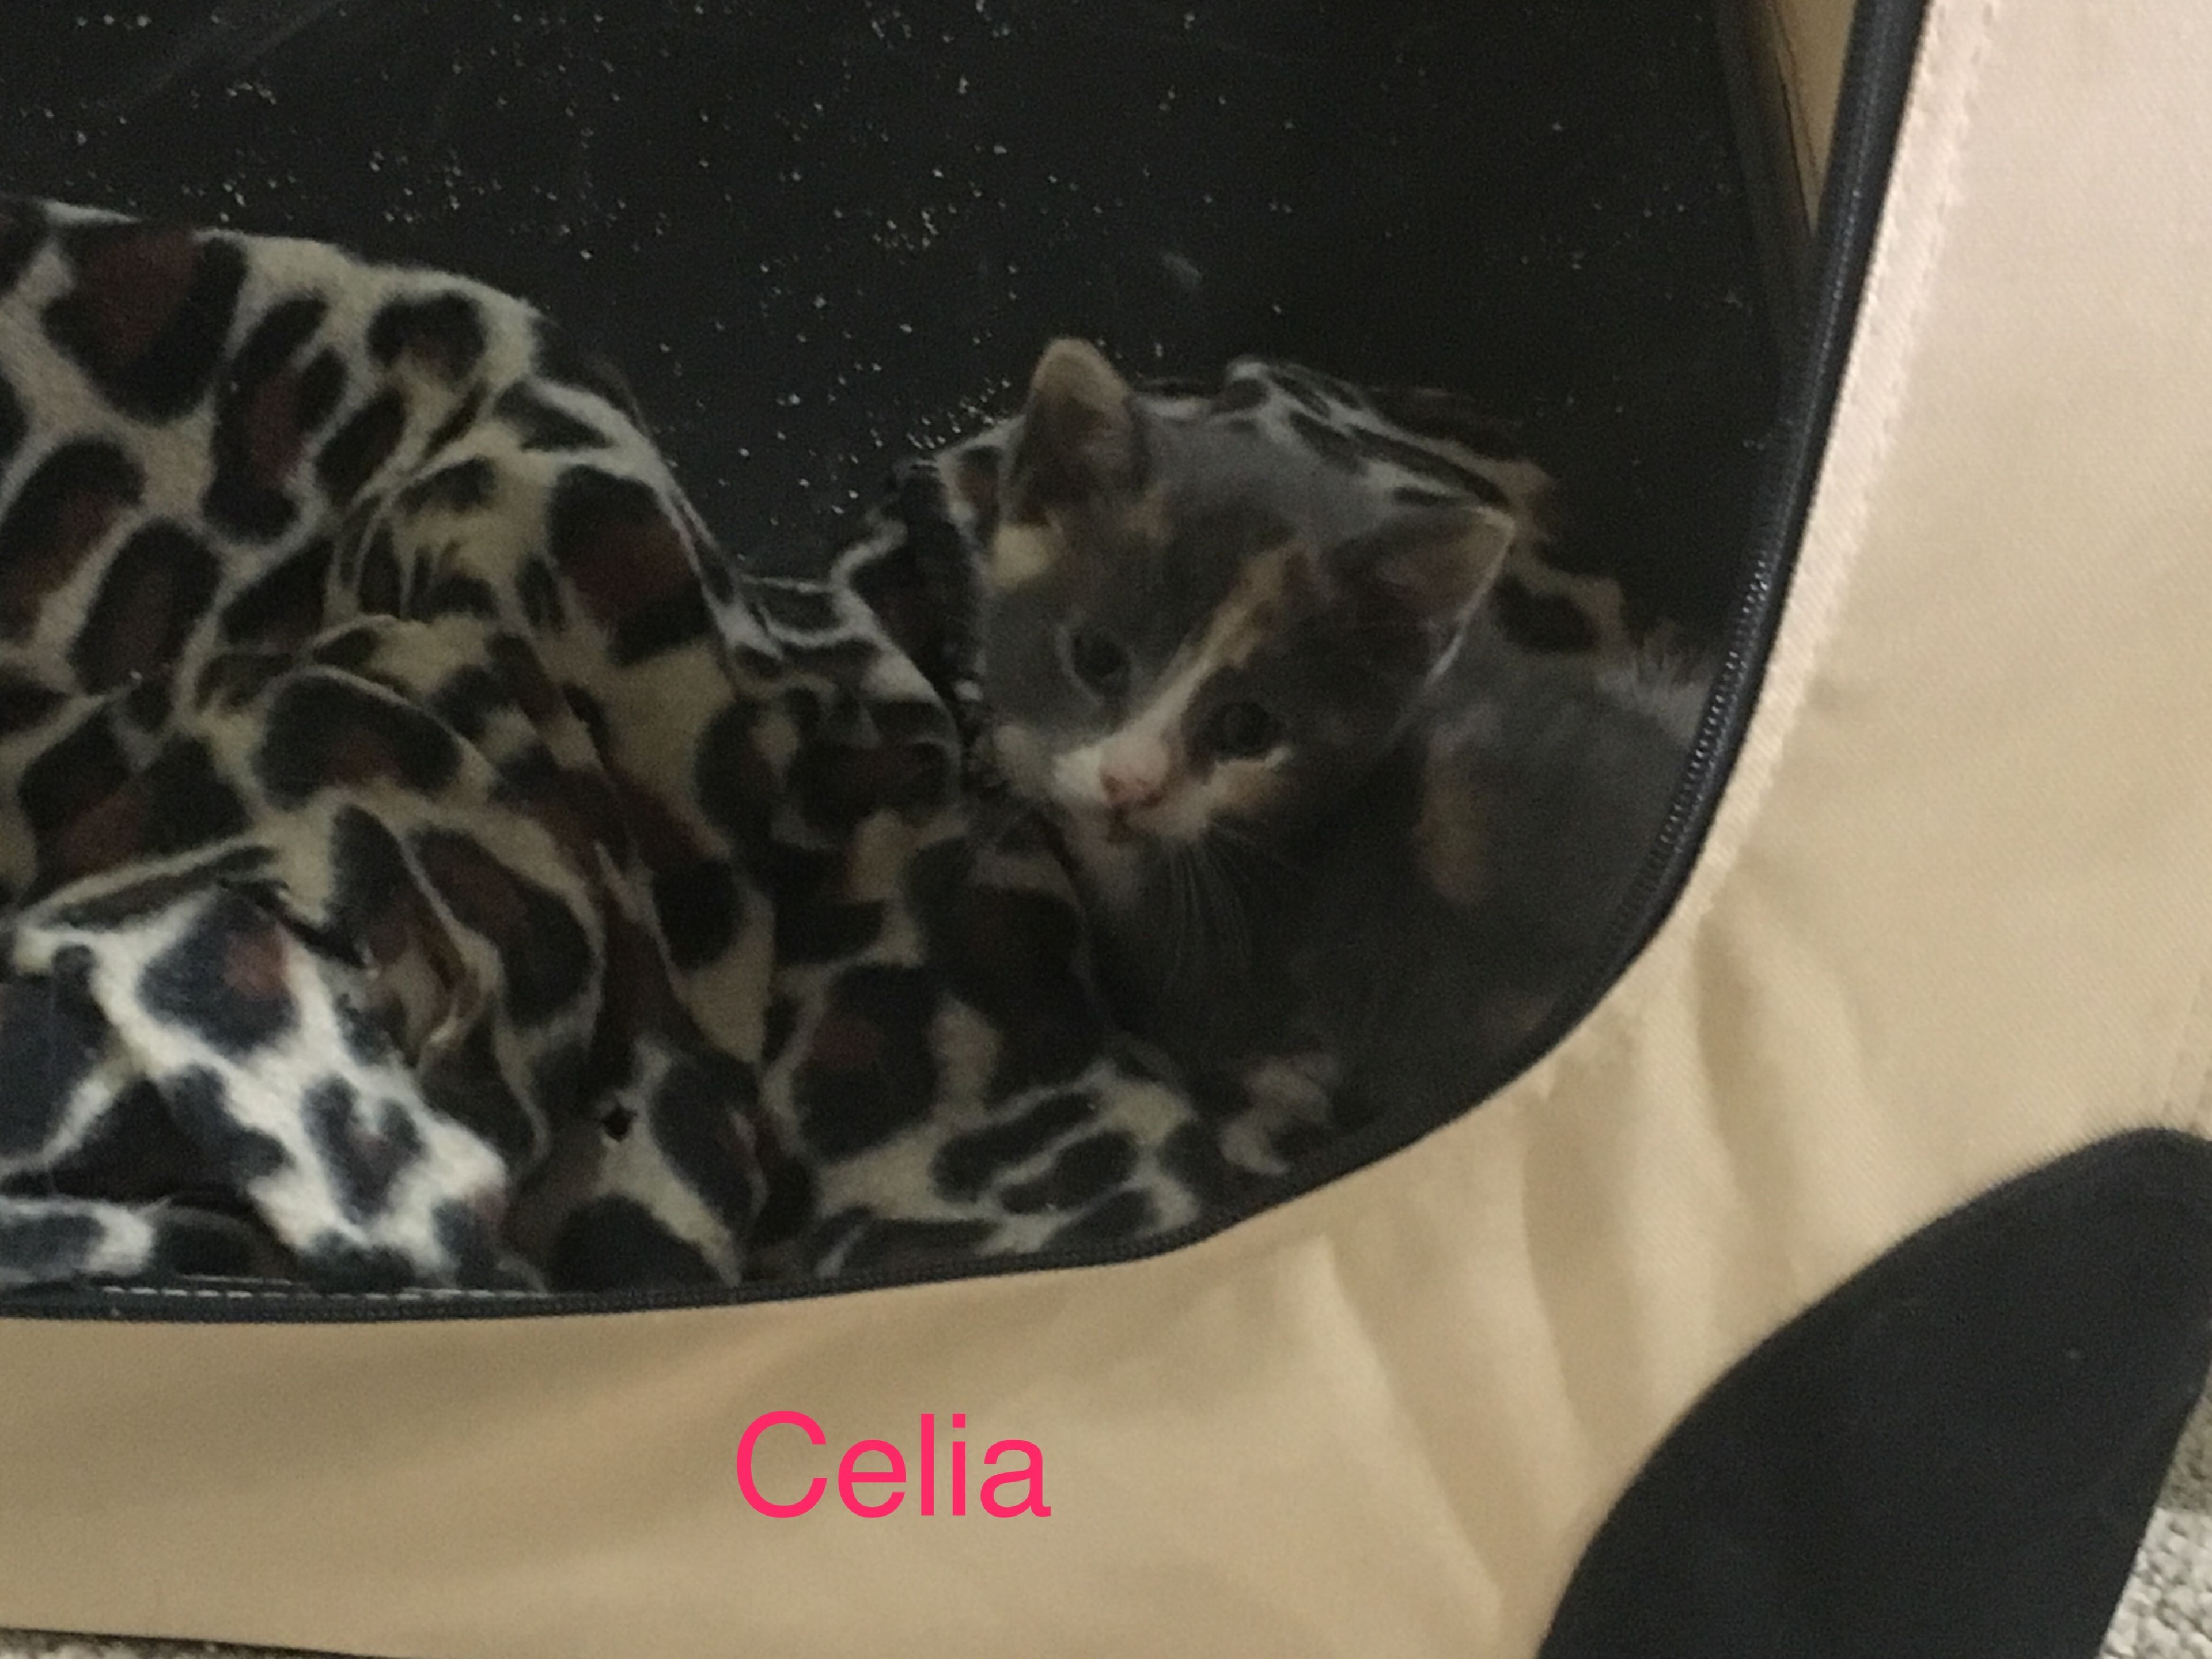 Celia detail page